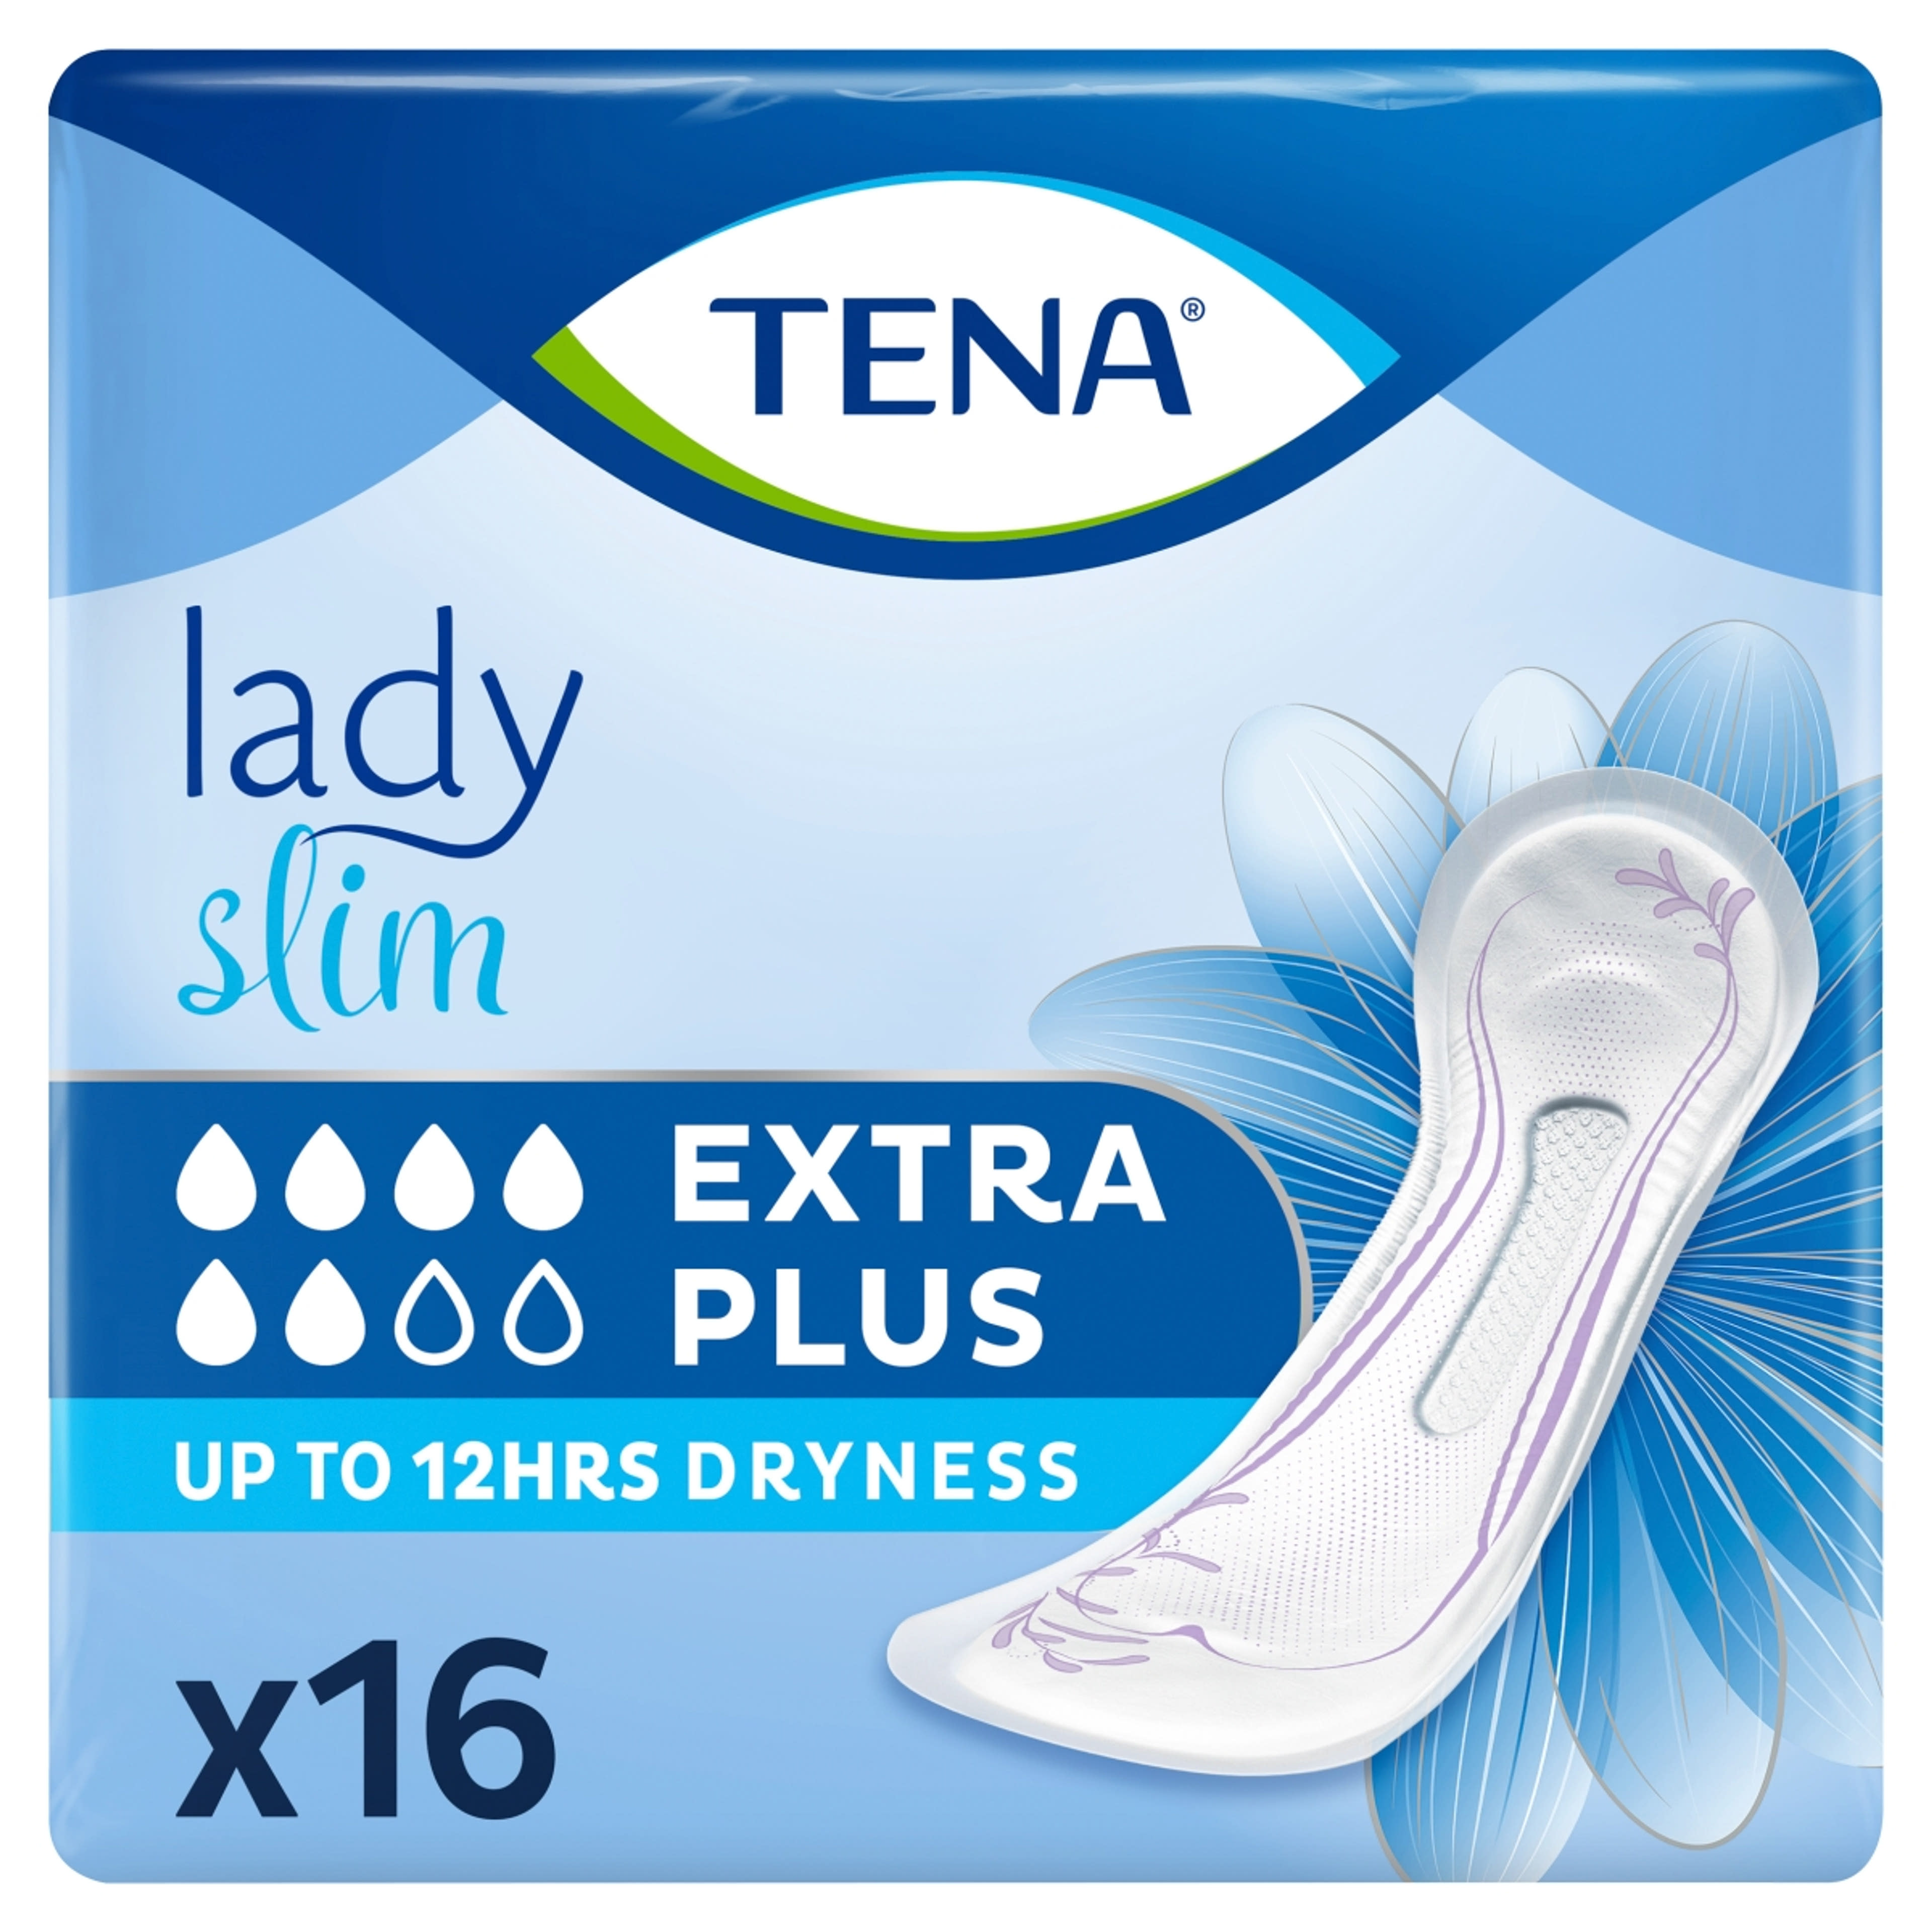 Tena Lady inkontinencia betét extra plus - 16 db-5